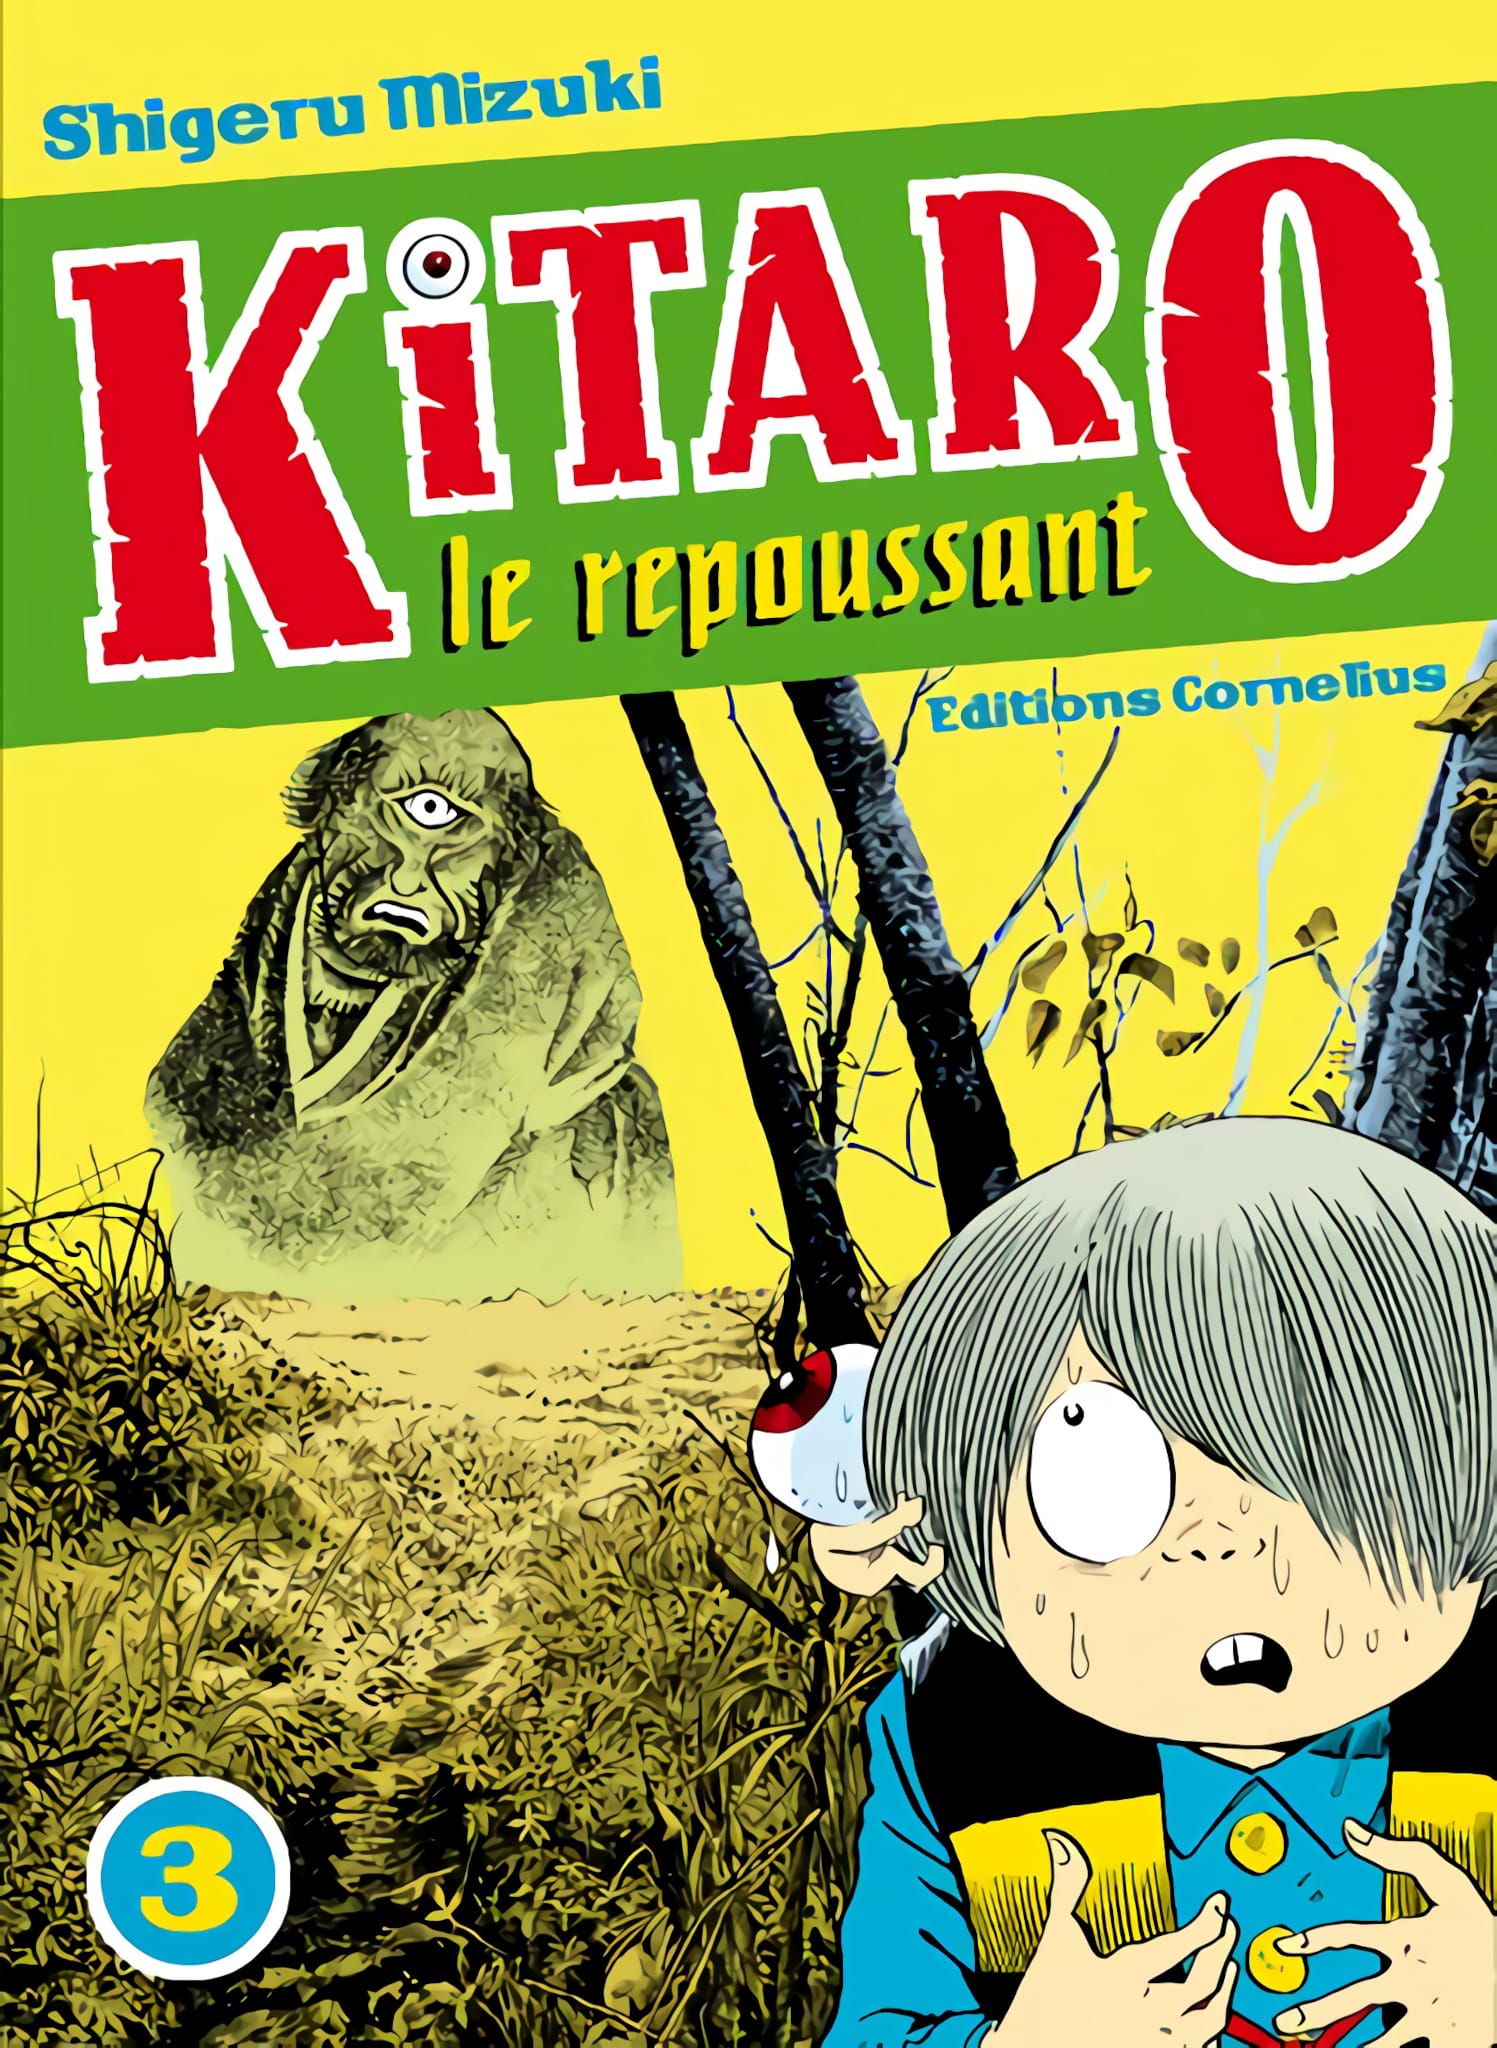 Tome 3 du manga Kitaro le repoussant